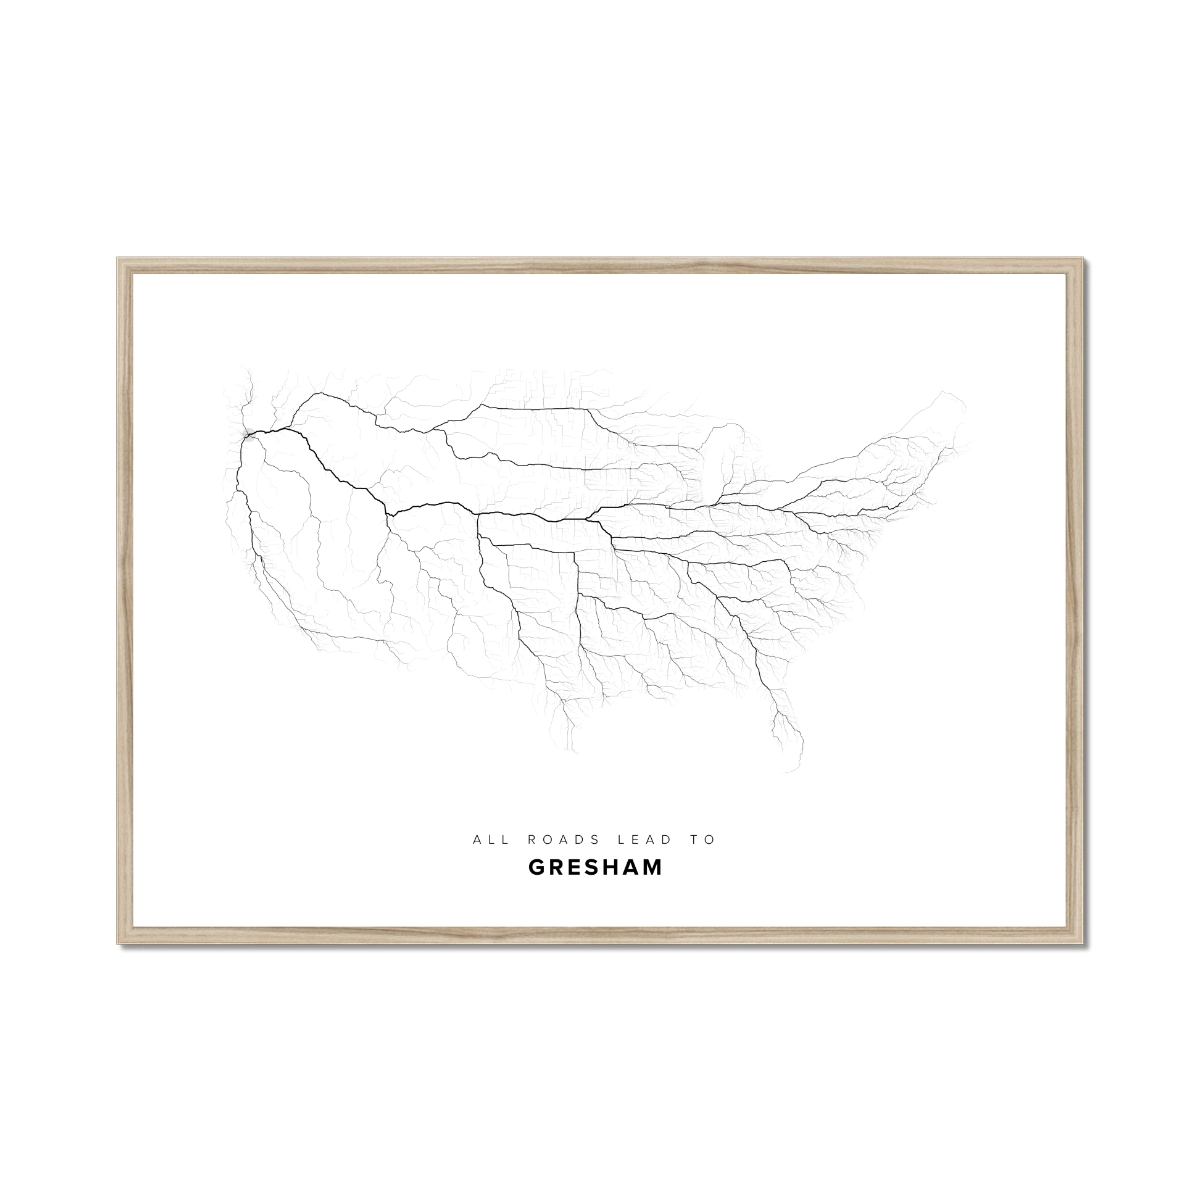 All roads lead to Gresham (United States of America) Fine Art Map Print